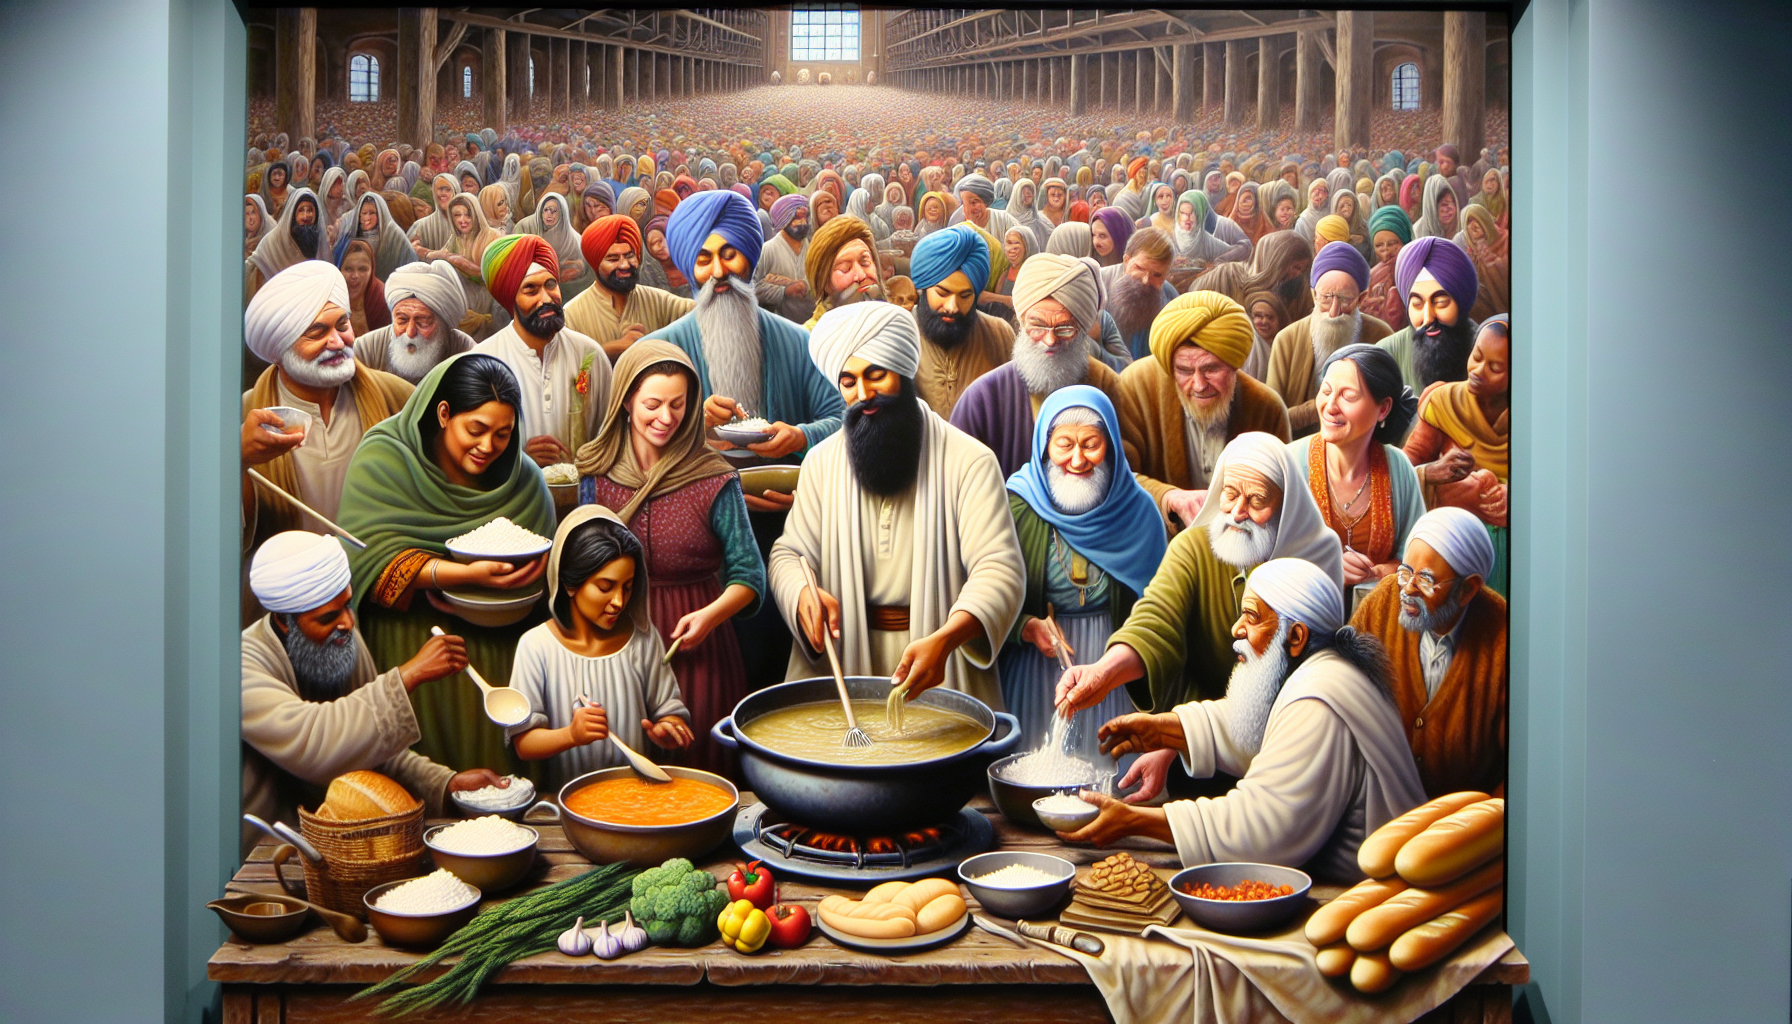 Religious community feeding the hungry